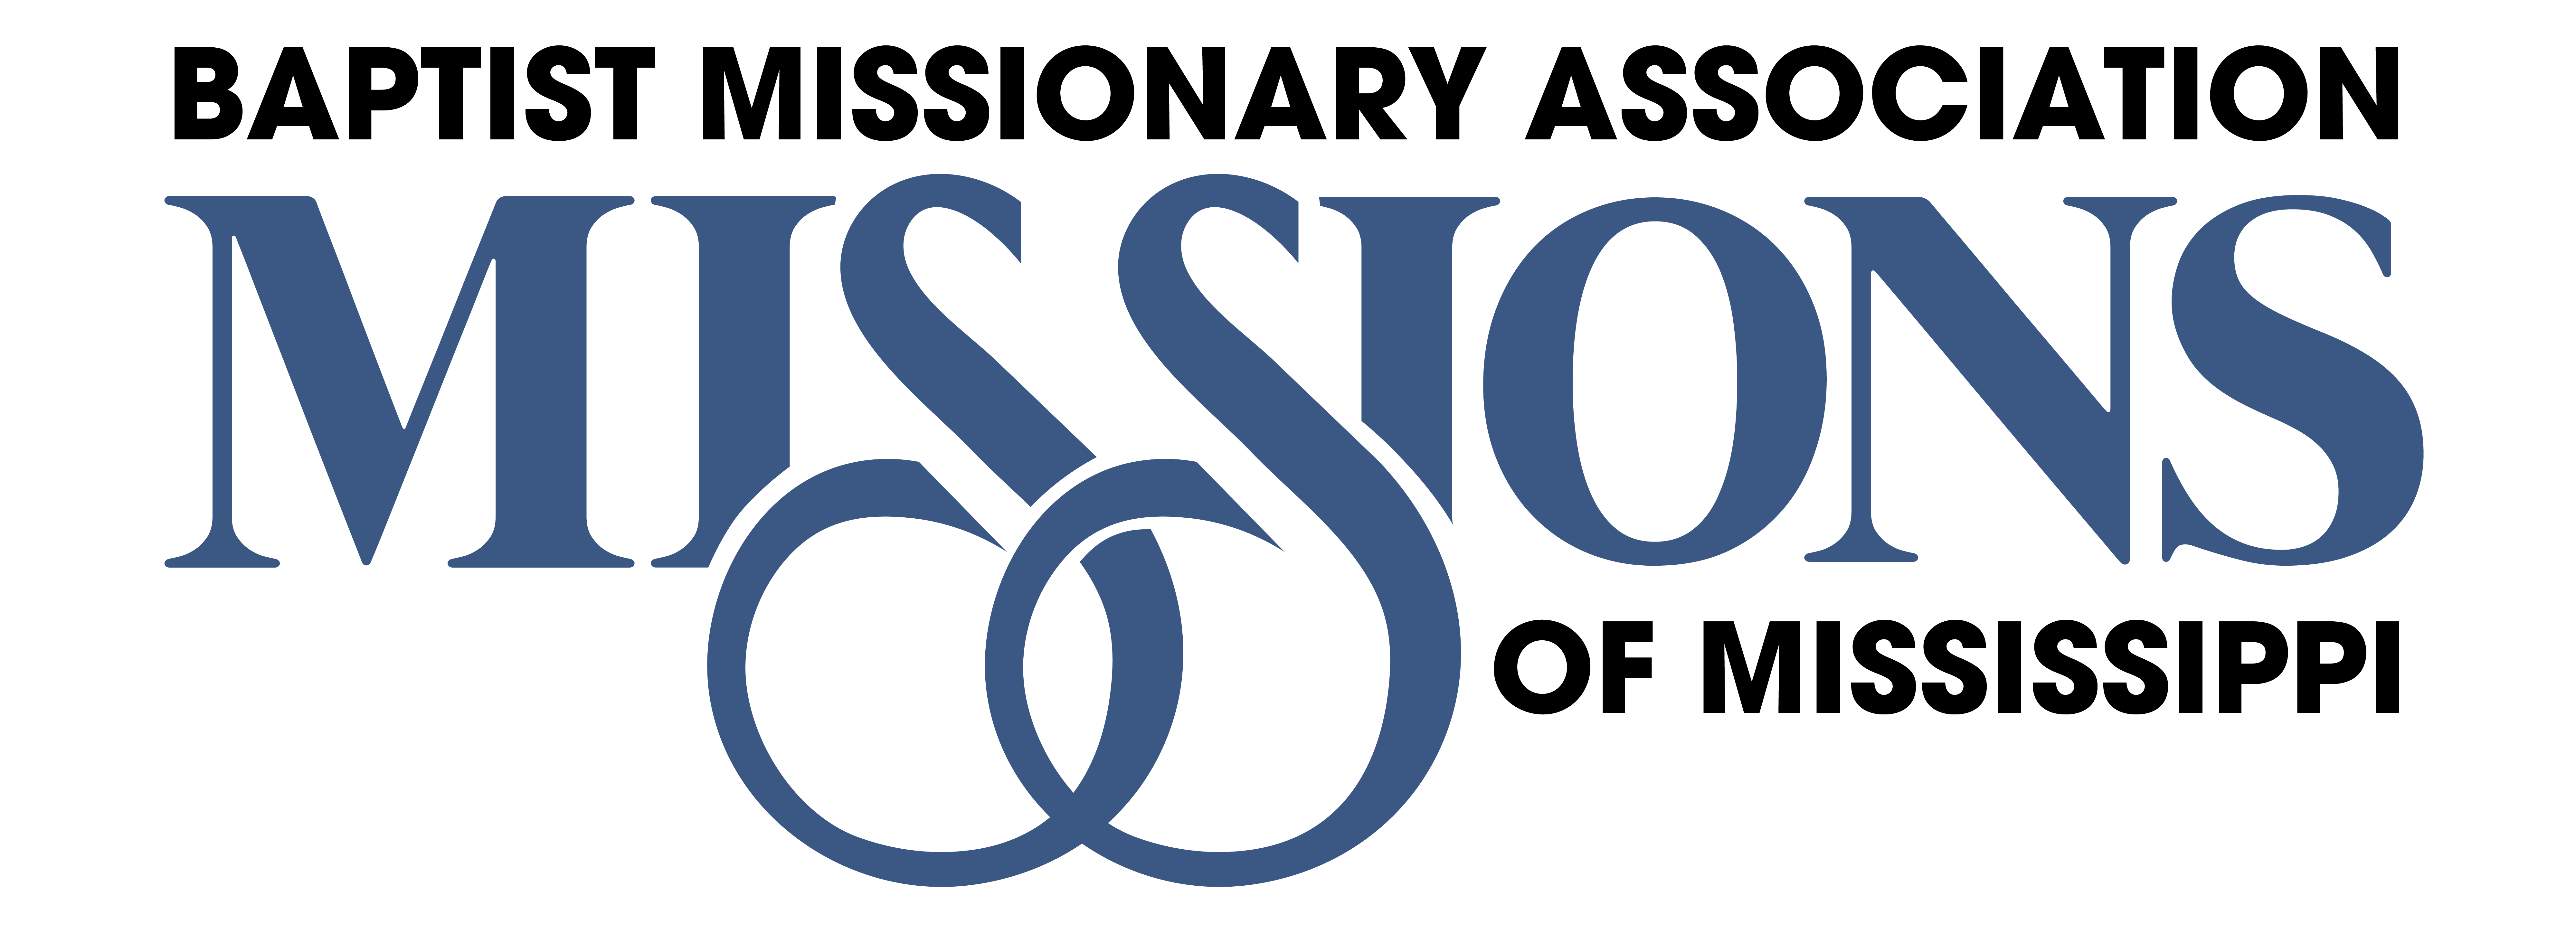 Baptist Missionary Association Of Mississippi | Missions & Revolving Loan Fund Department